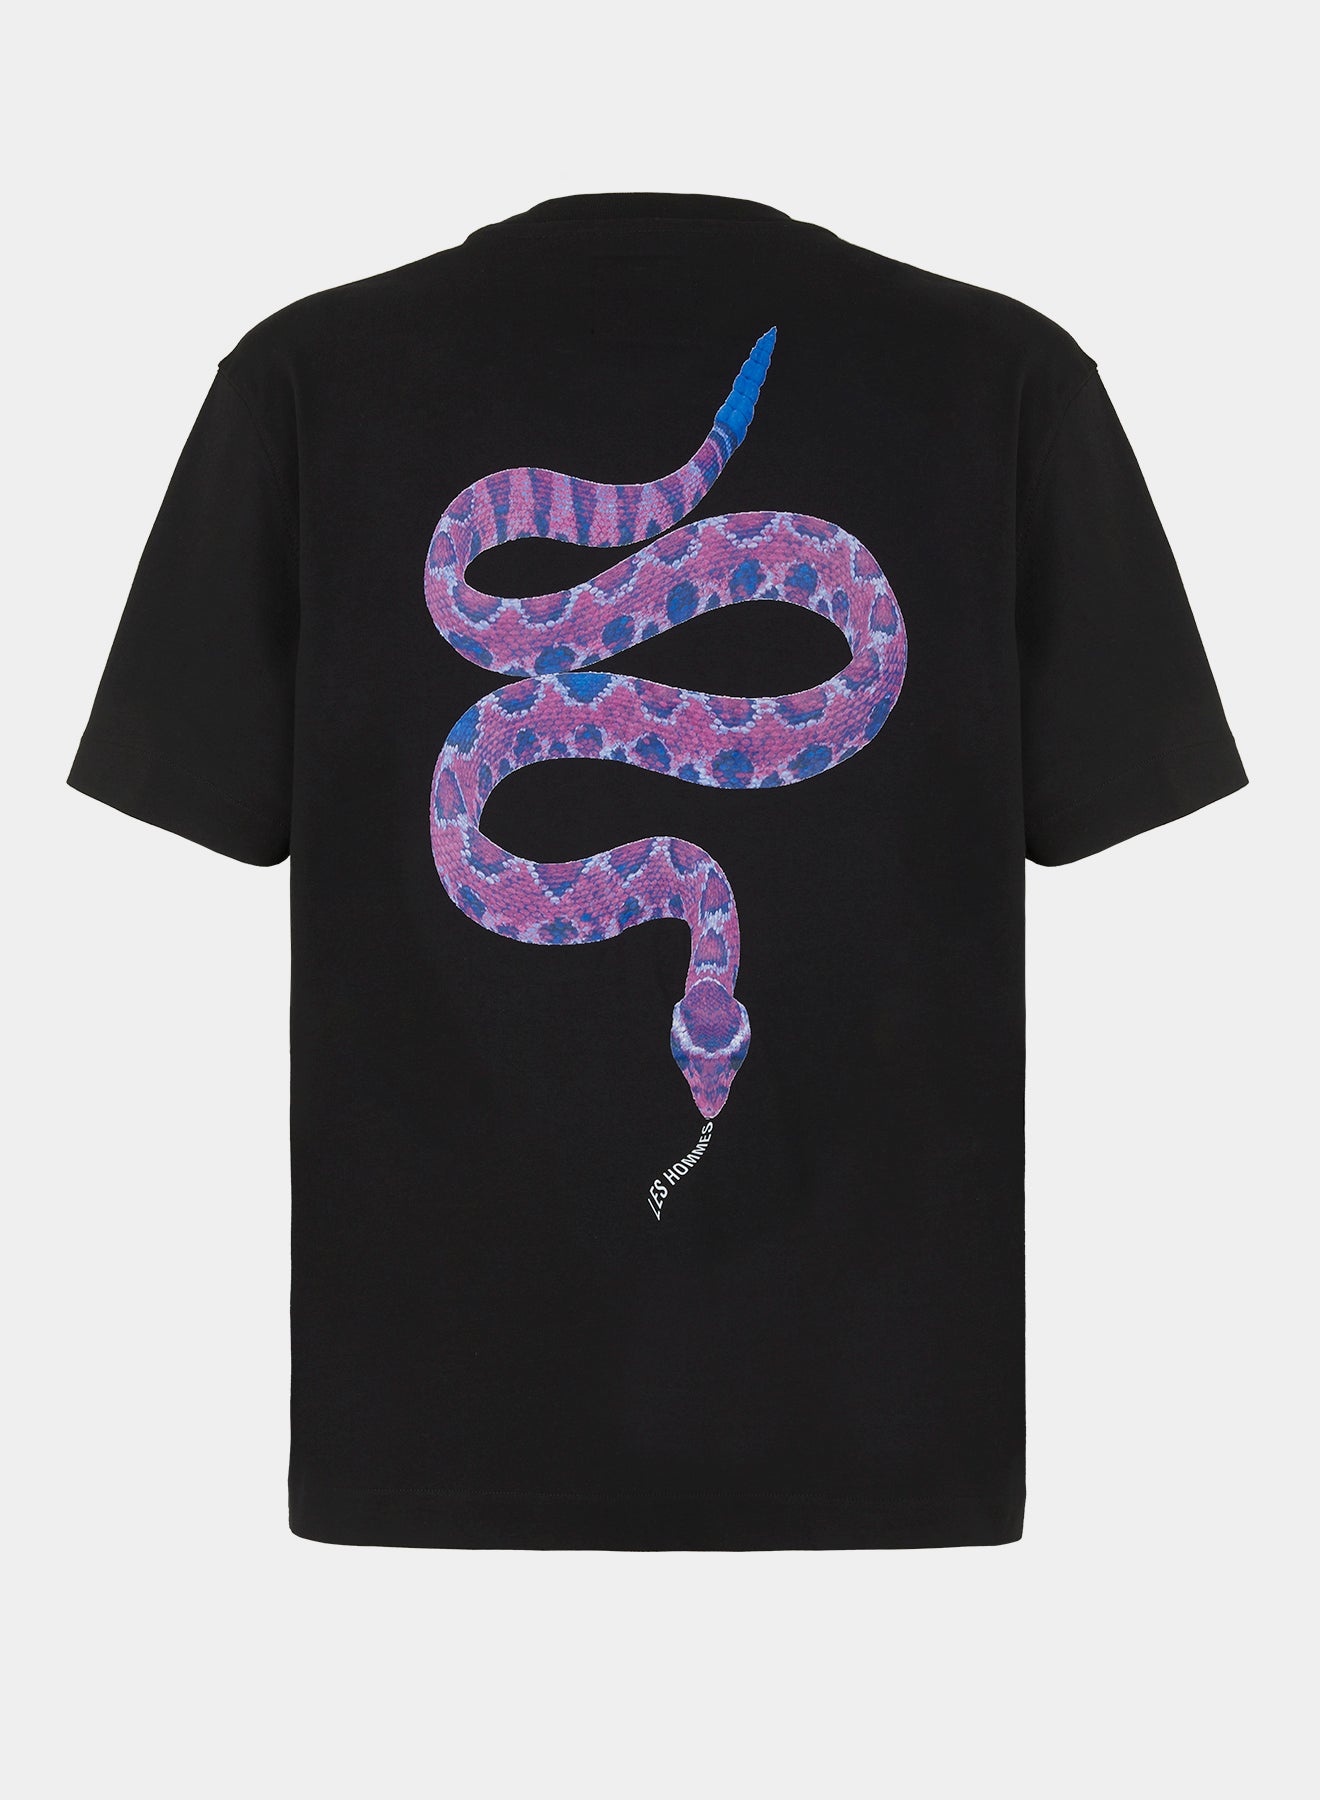 Viper print t-shirt